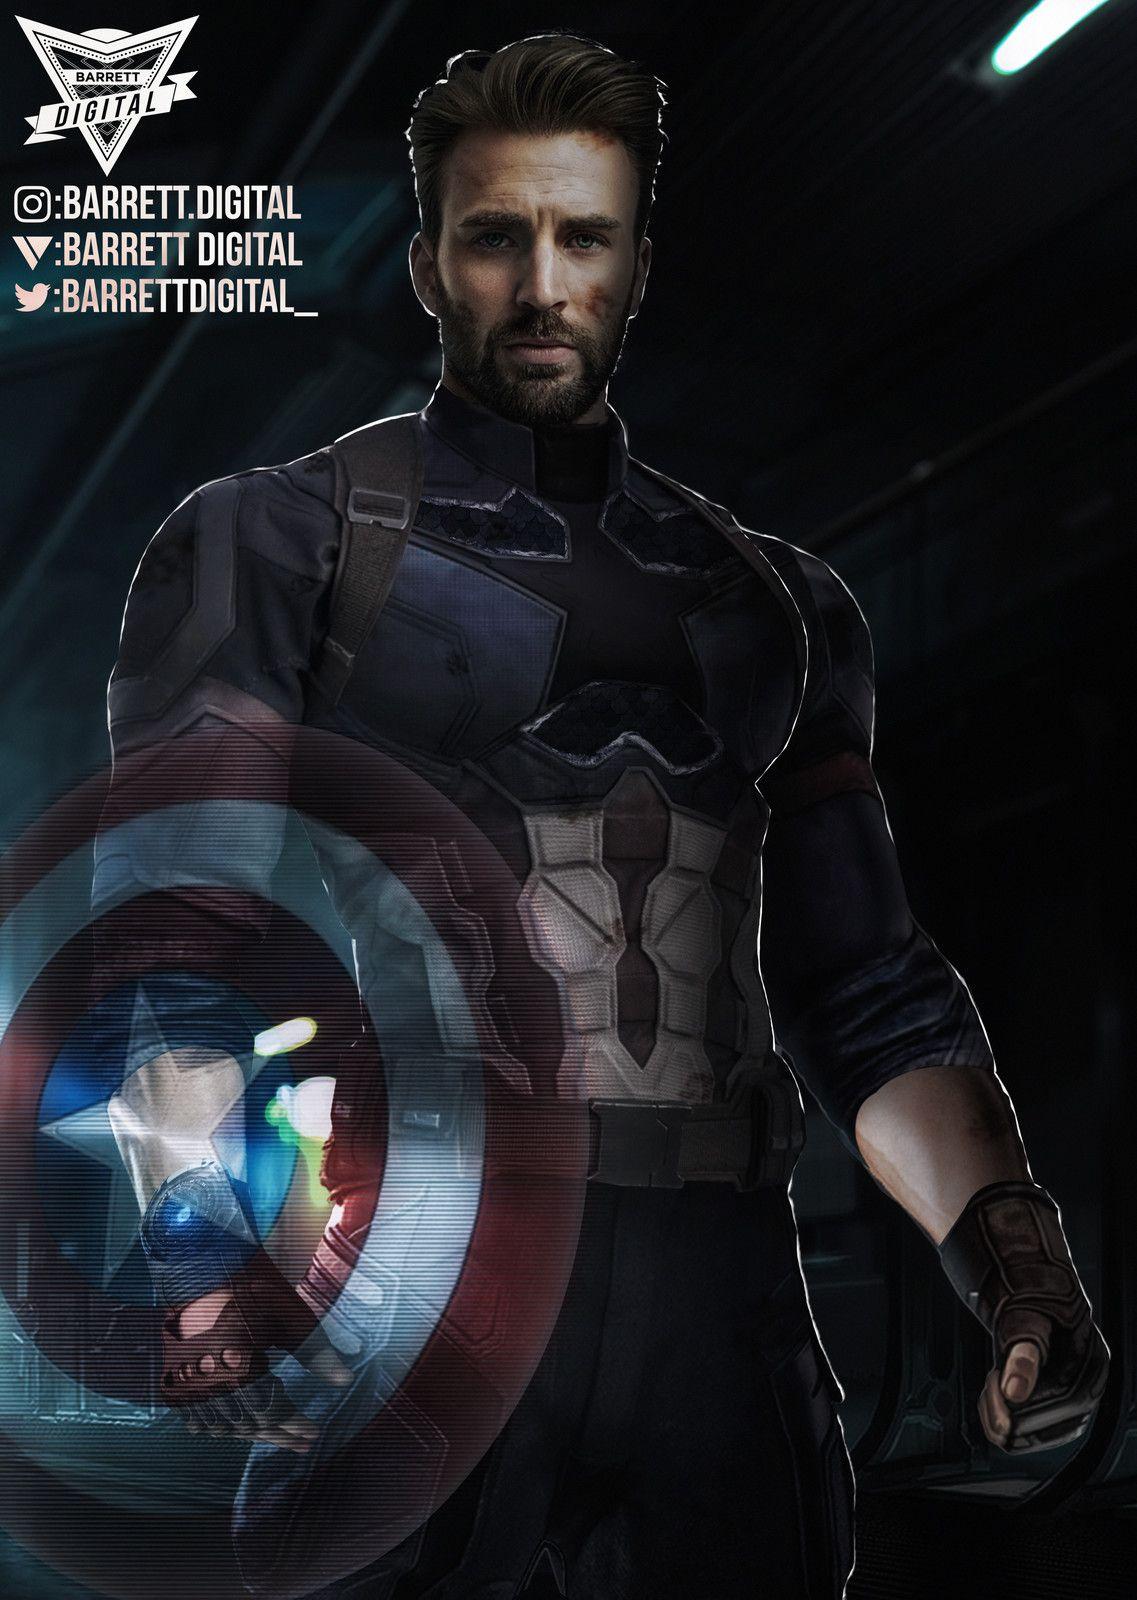 Captain America Avengers Infinity War Artwork Wallpapers